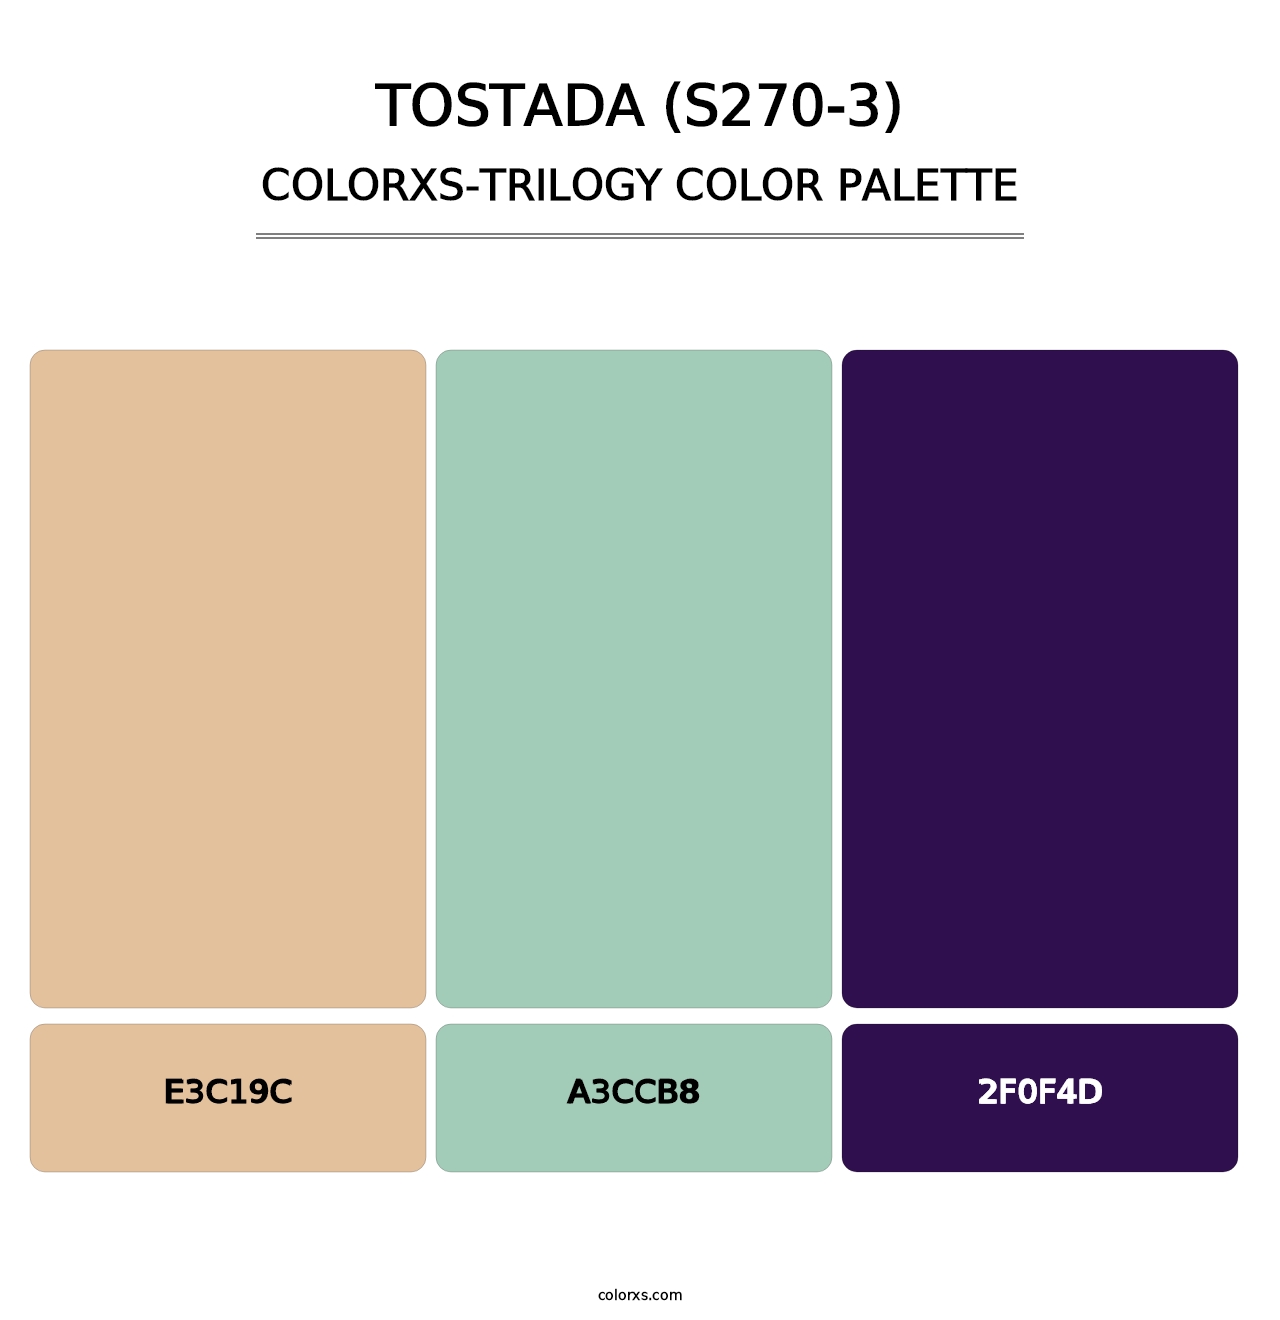 Tostada (S270-3) - Colorxs Trilogy Palette